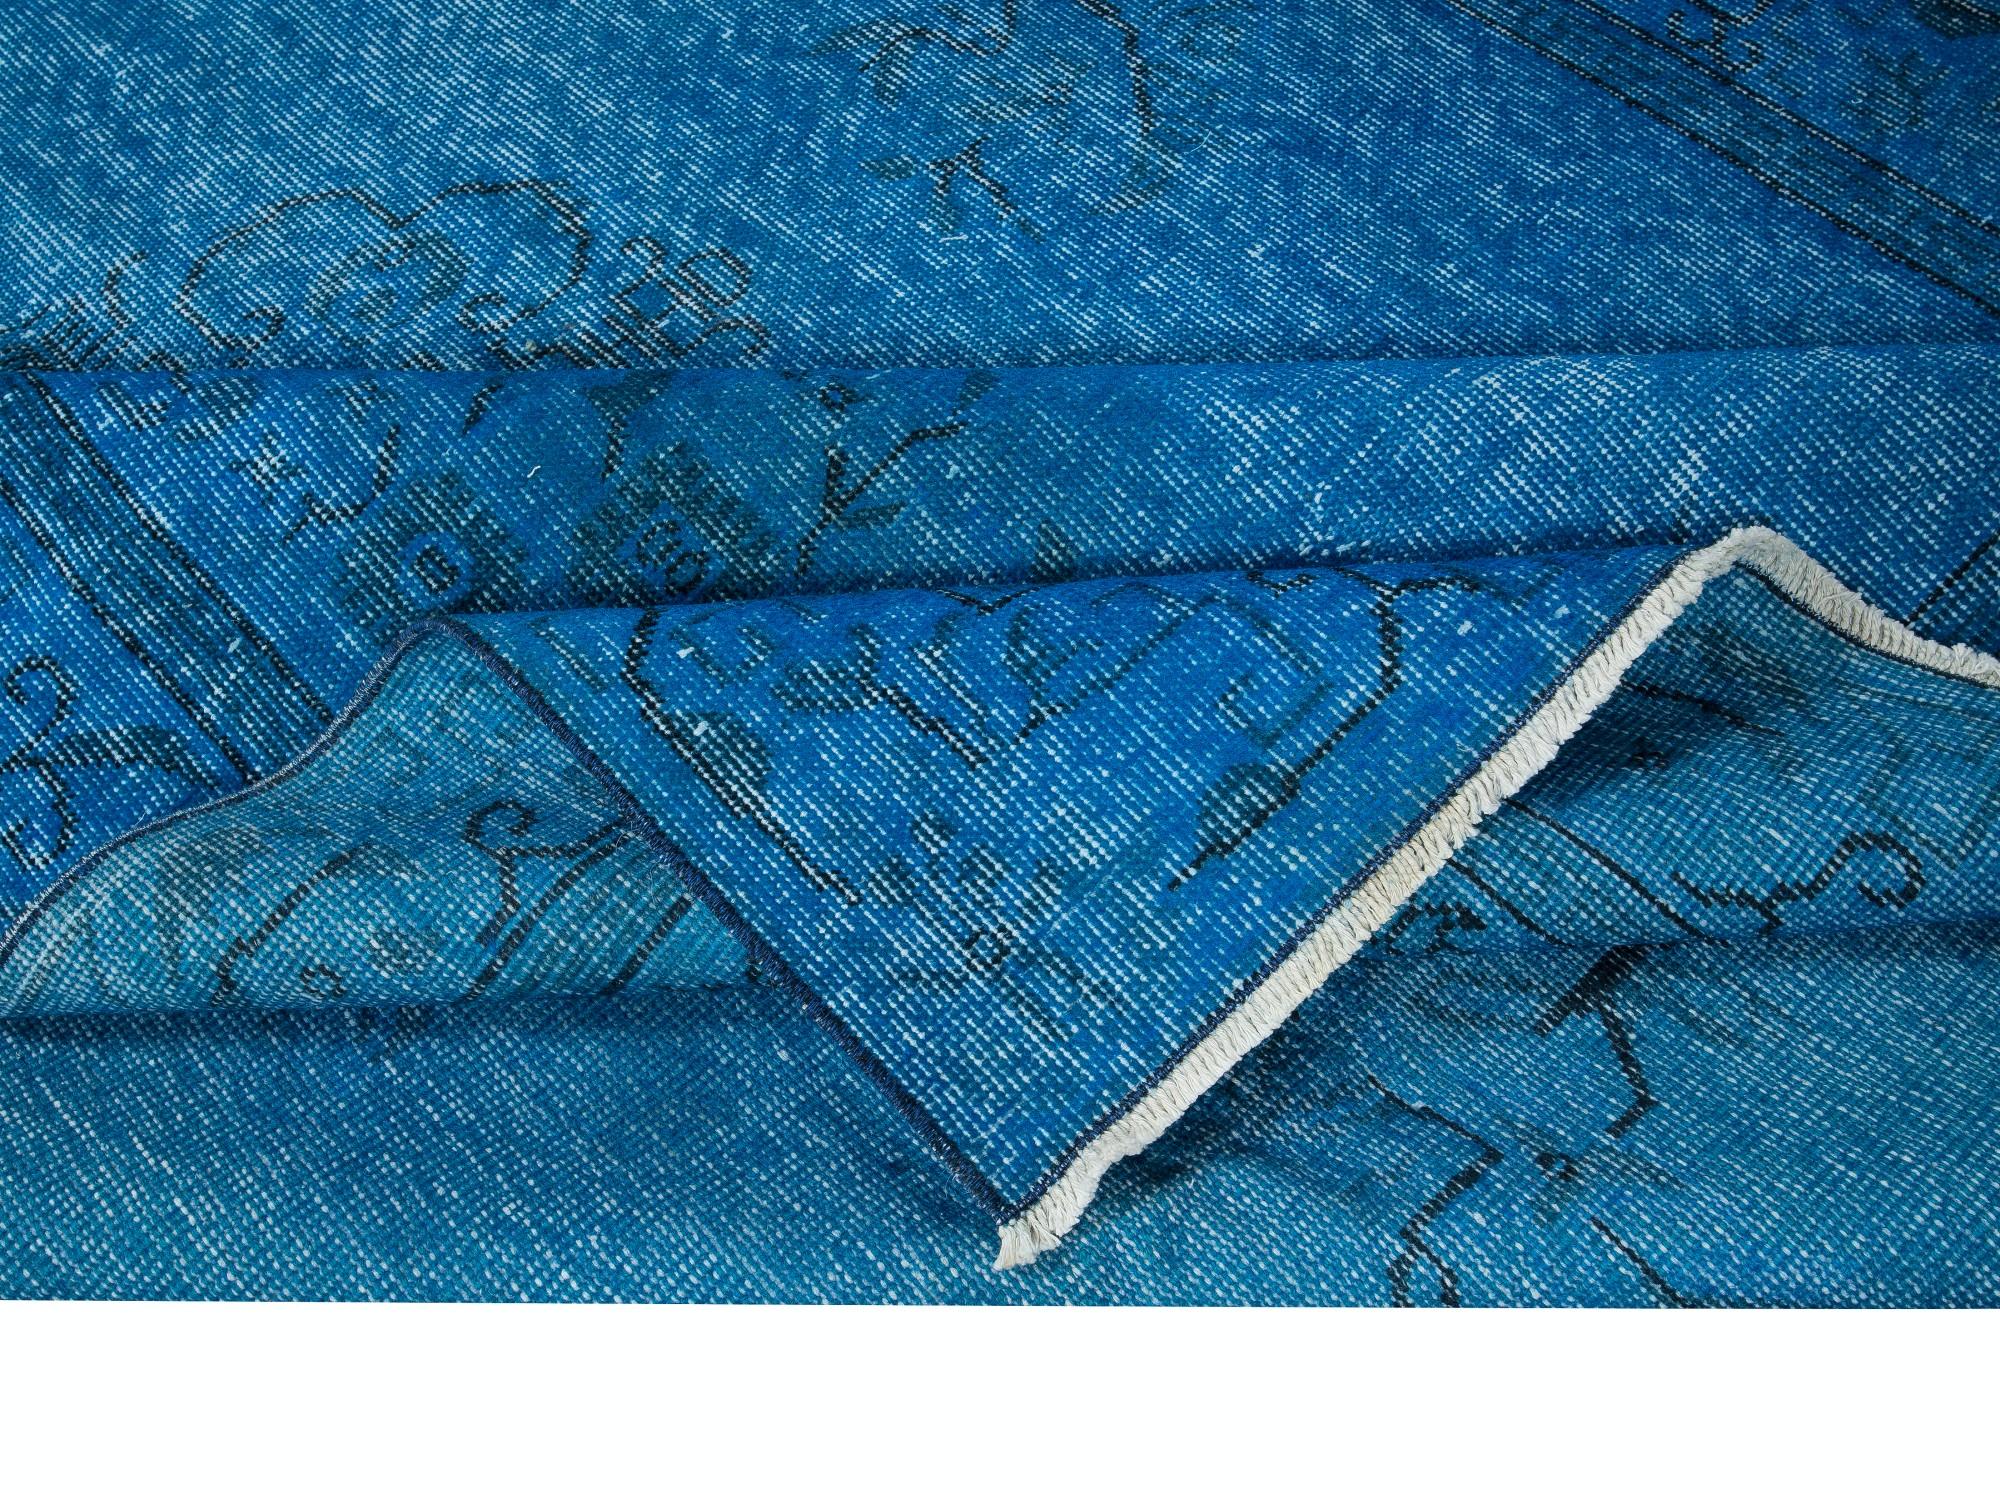 Hand-Woven 5.5x8.8 Ft Chinese Art Deco Inspired Handmade Blue Rug for Modern Interiors For Sale